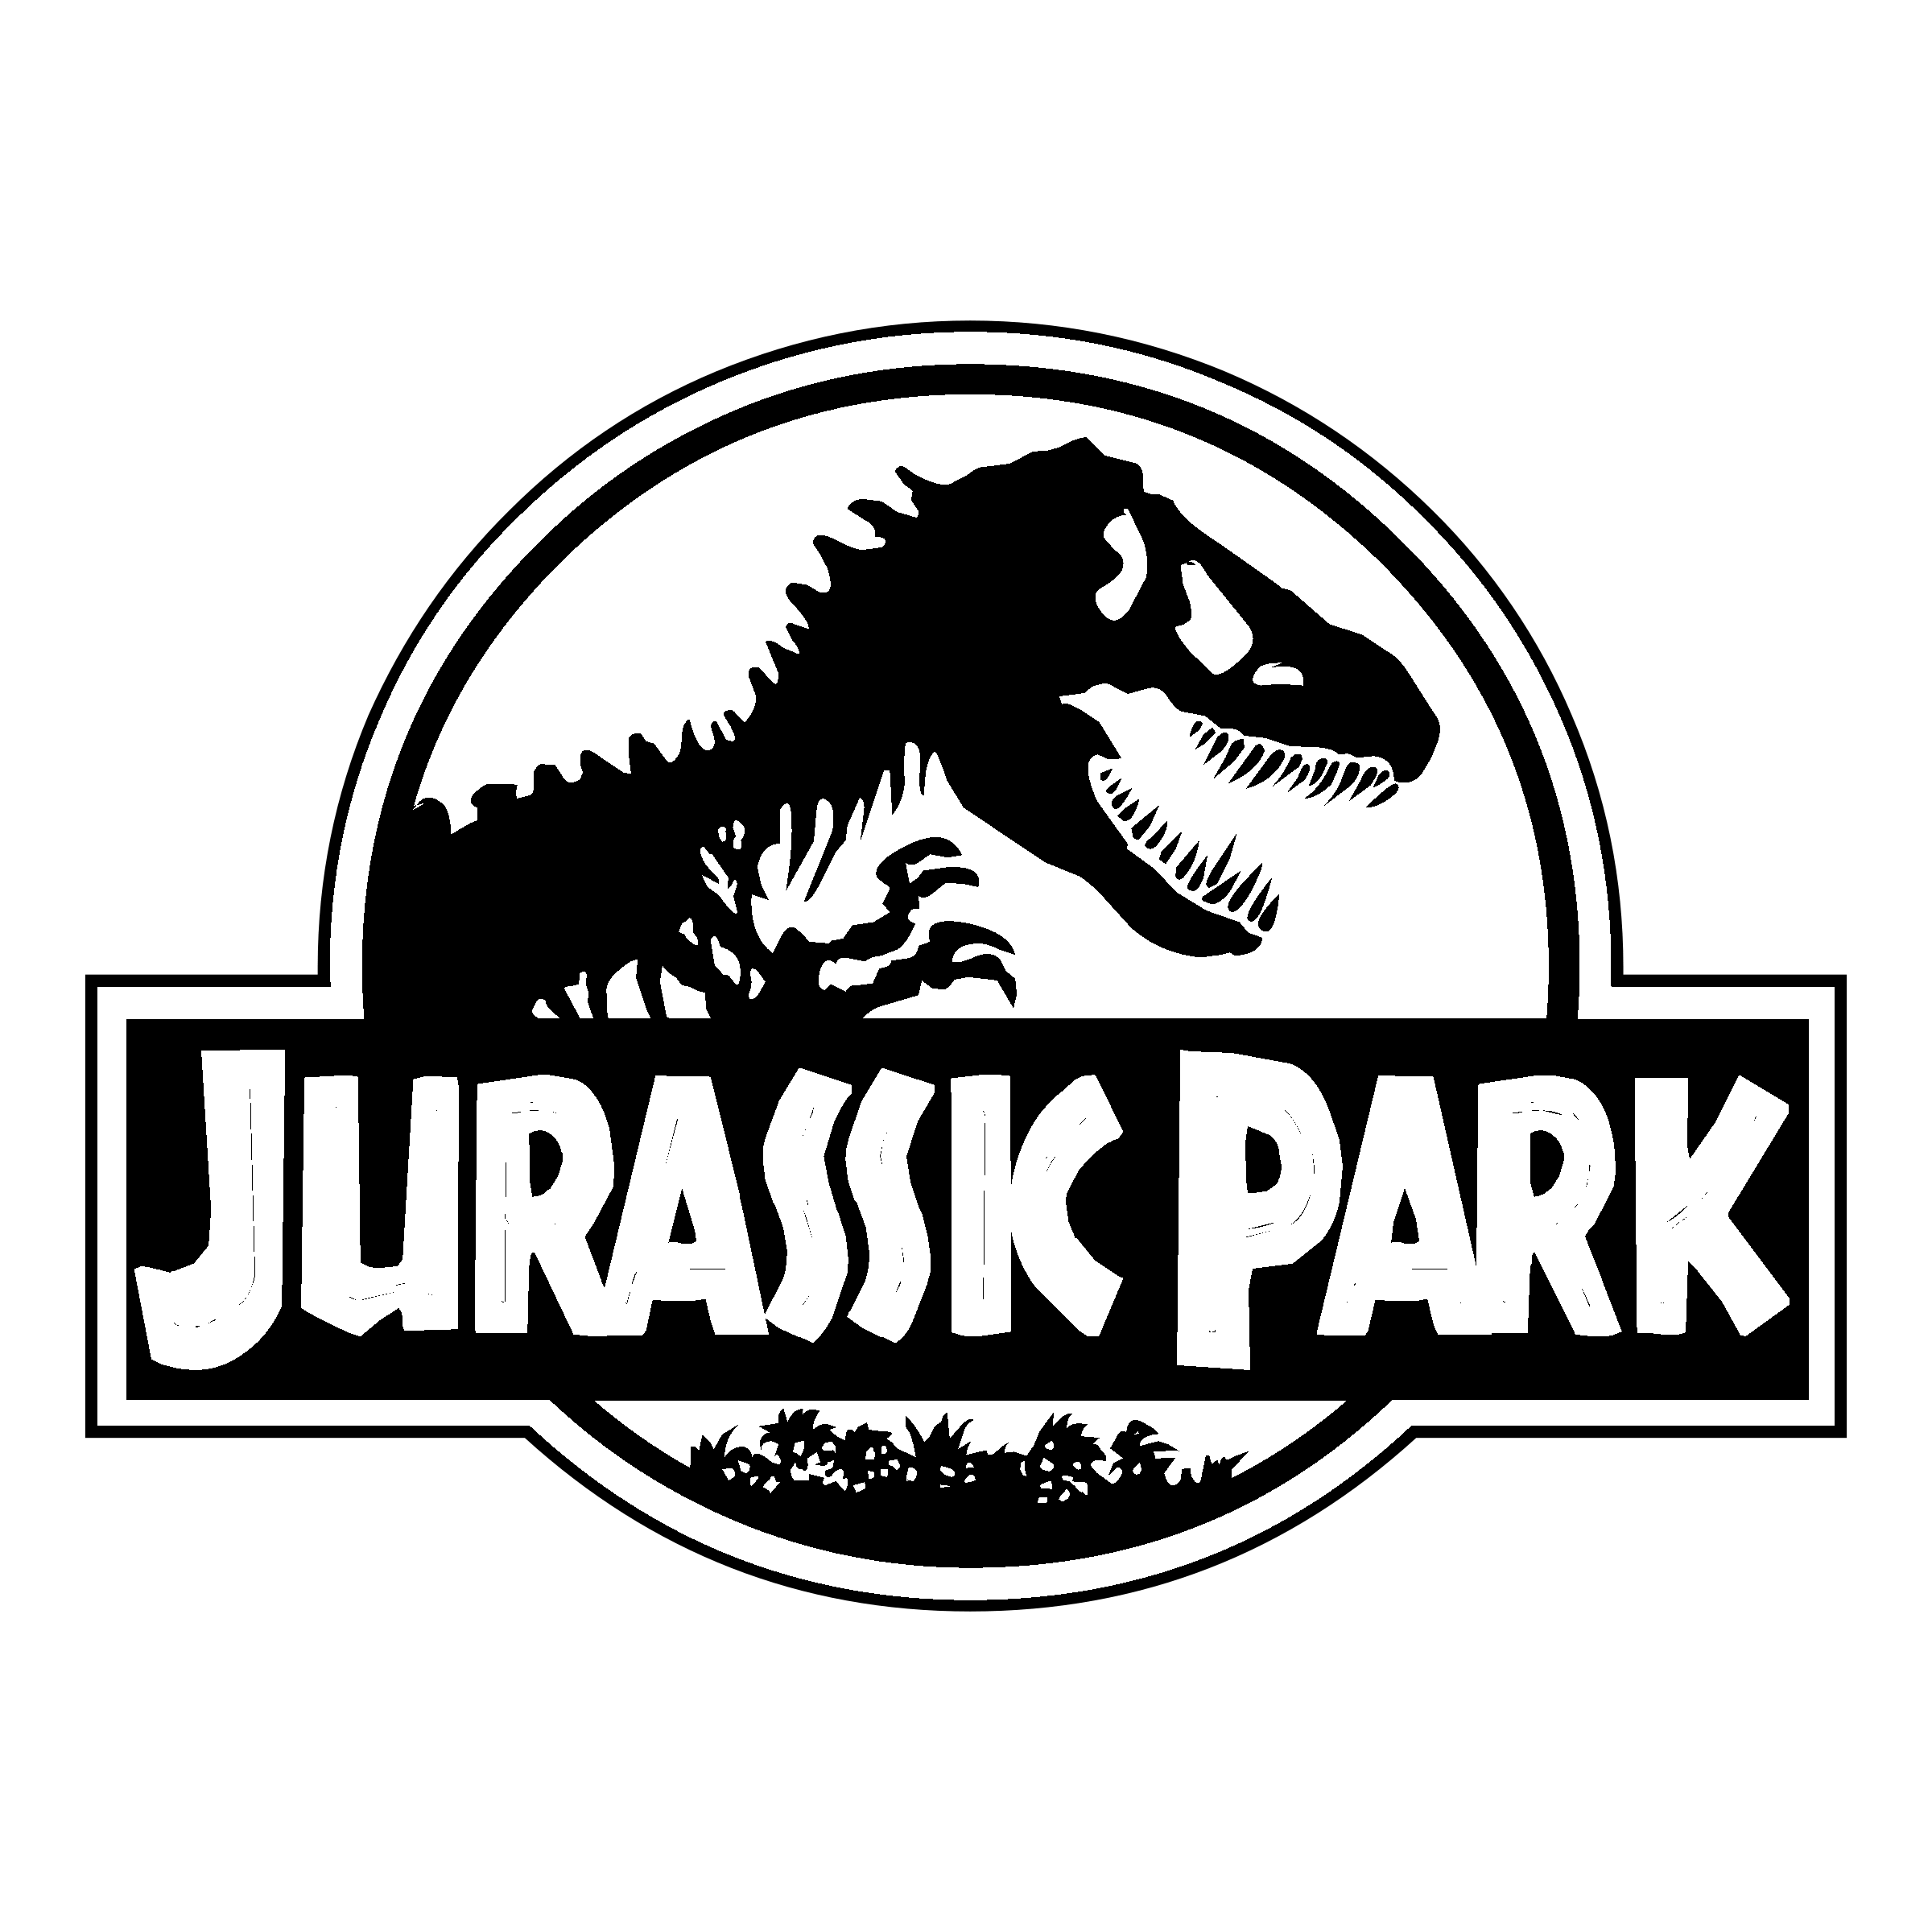 Jurassic Park Black and White Logo - Jurassic Park Logo Black And White | Cricut | Pinterest | Jurassic ...